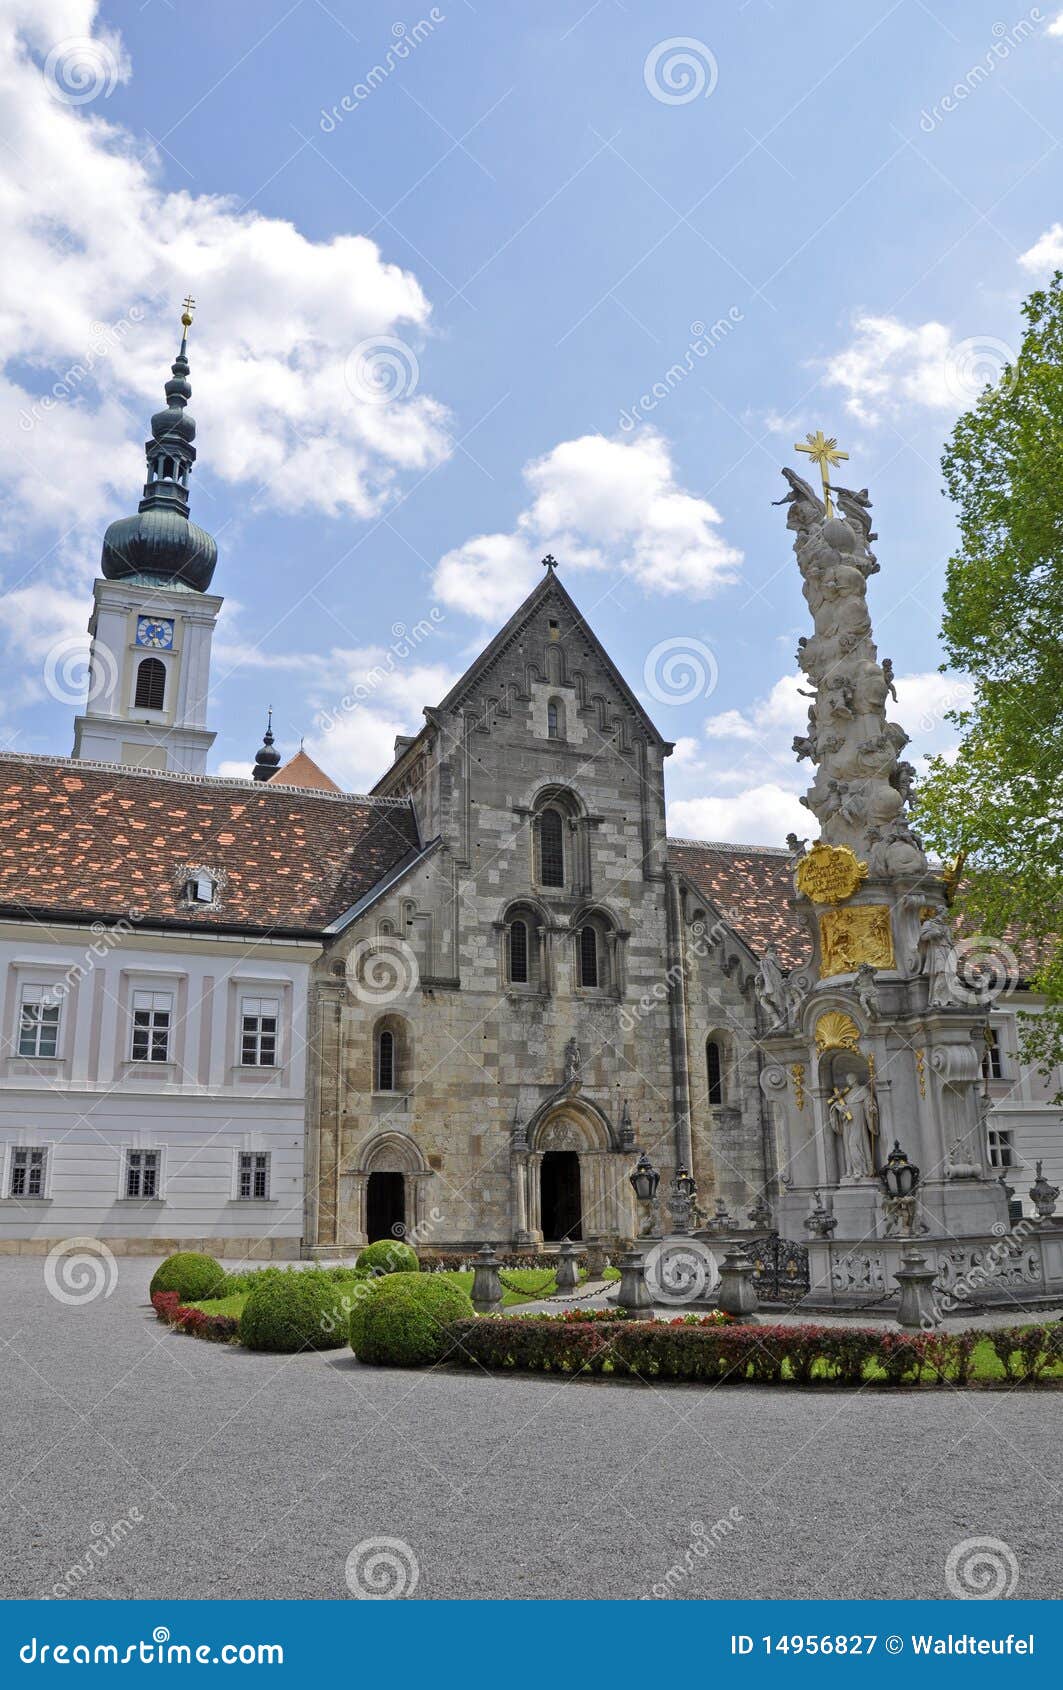 collegiate church of heiligenkreuz, lower austria